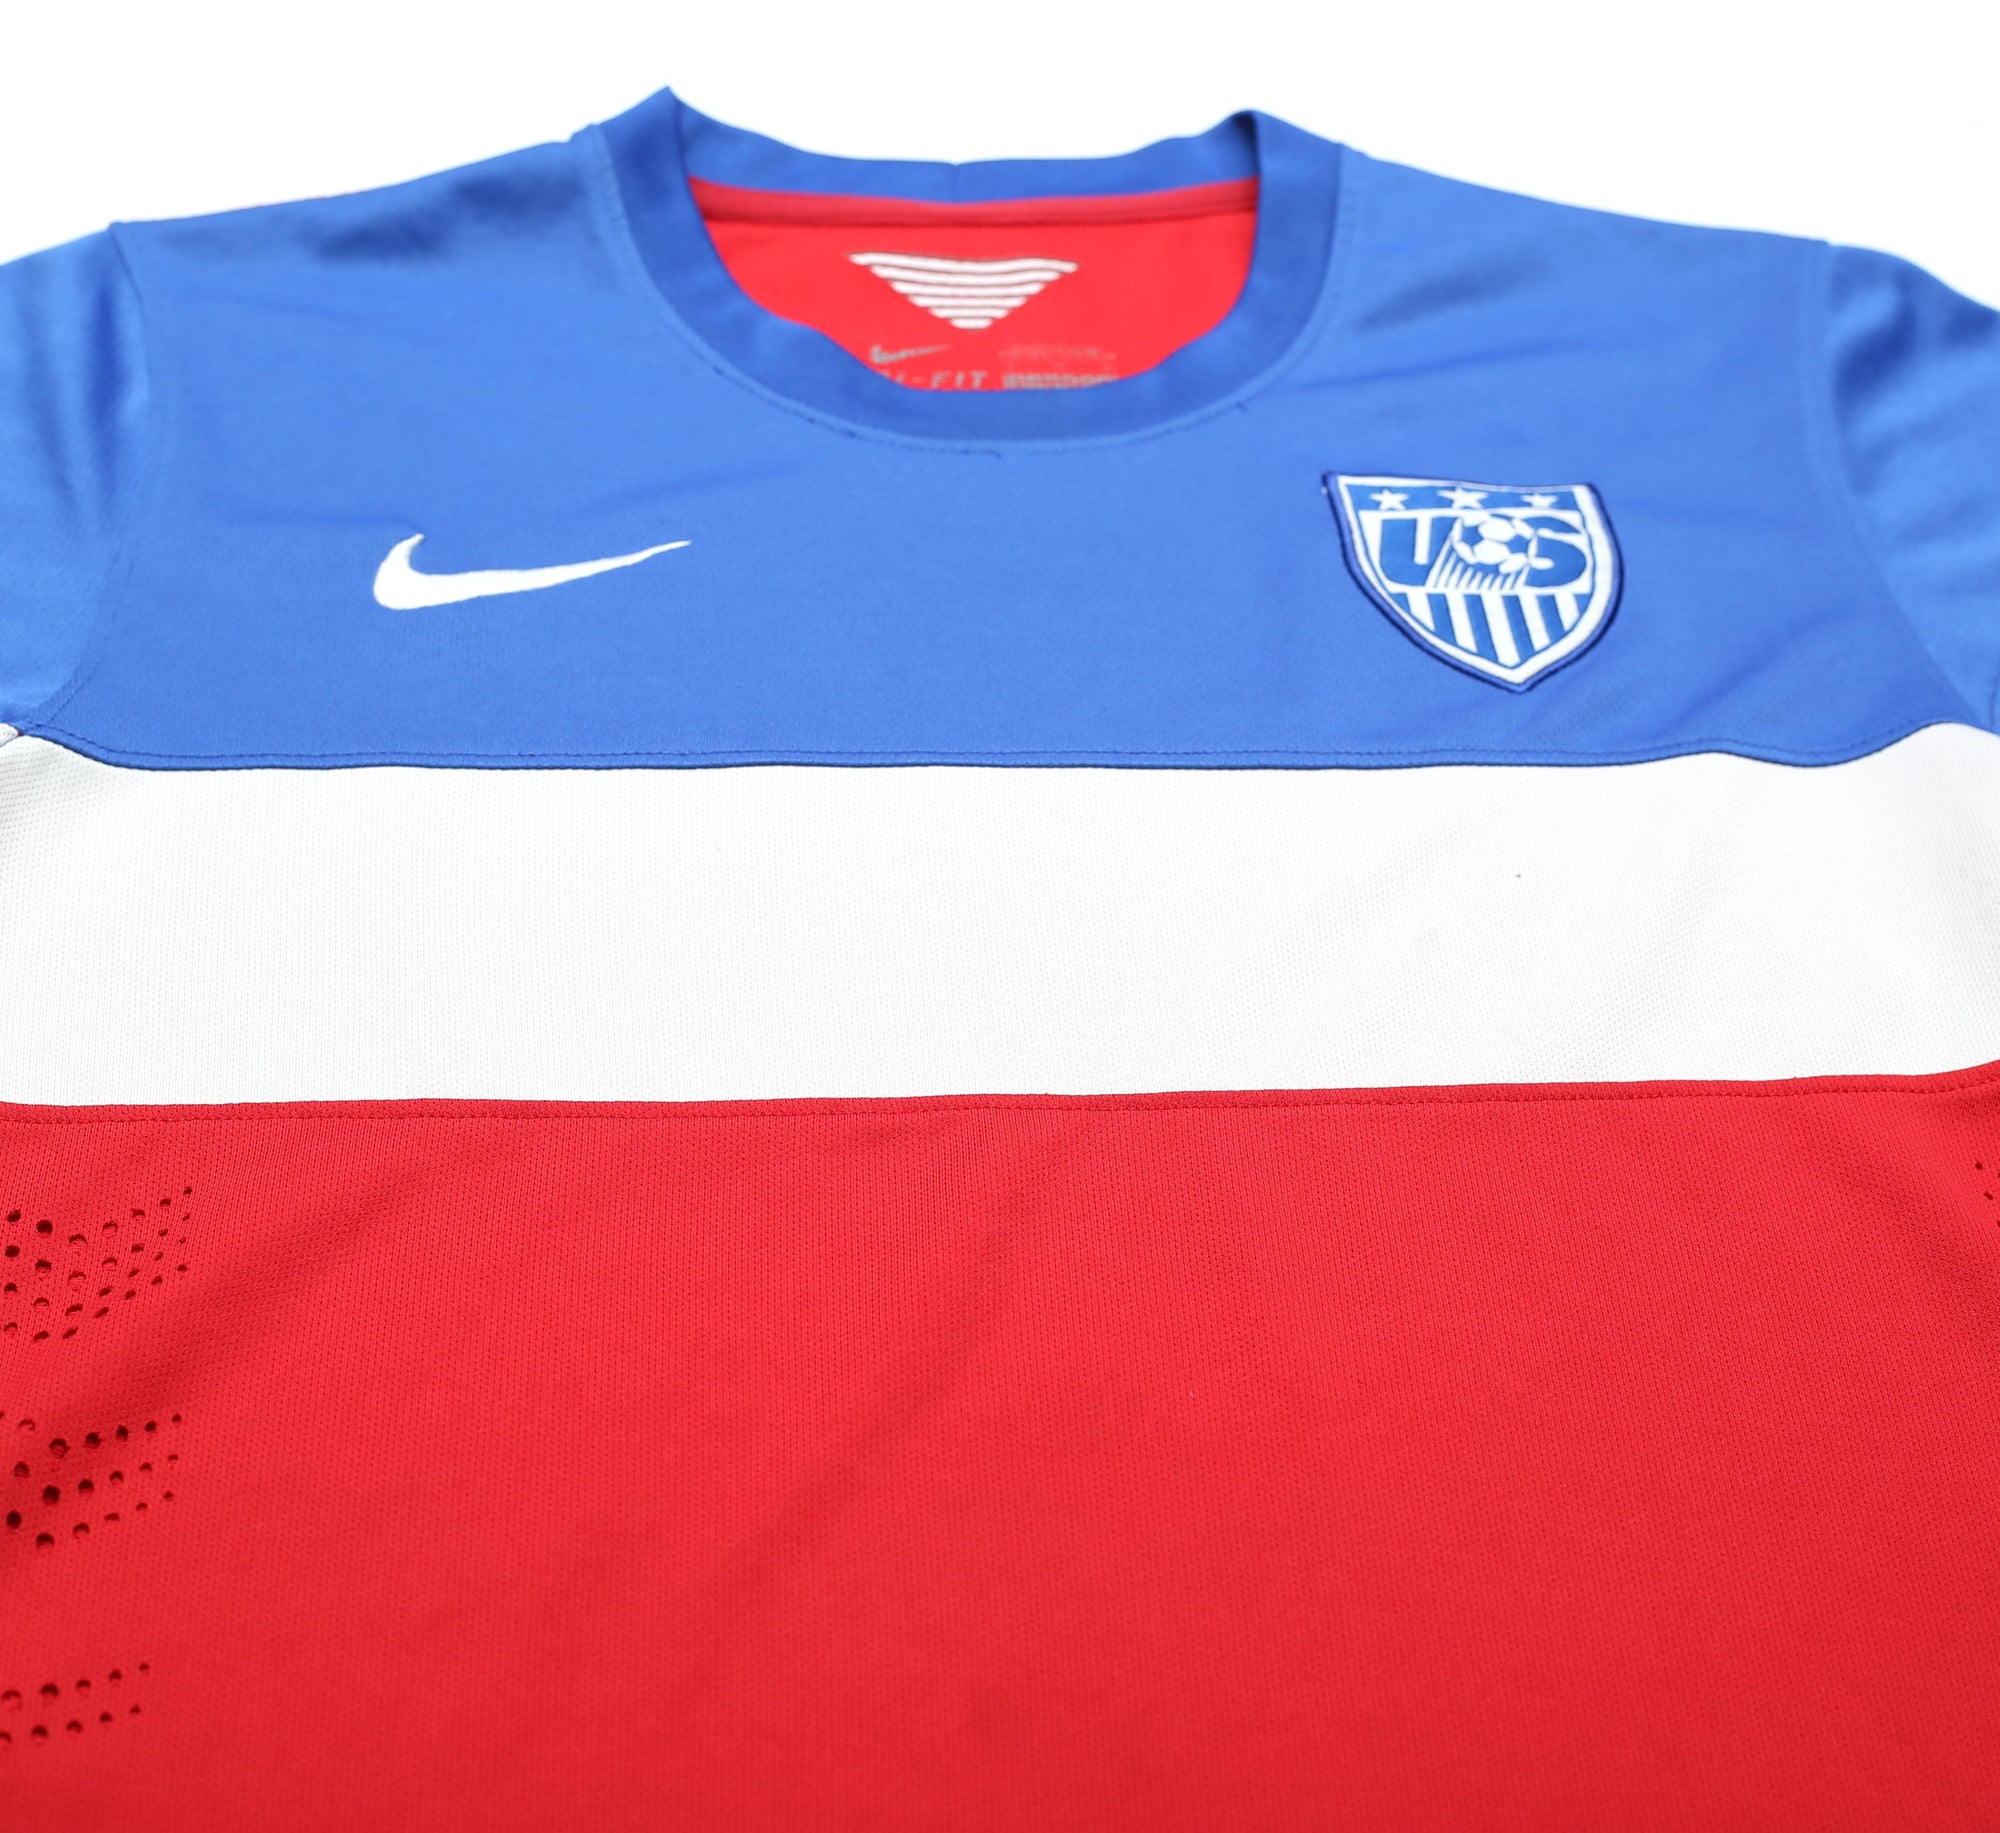 2014/15 USA Vintage NIKE Football Soccer Shirt (M)